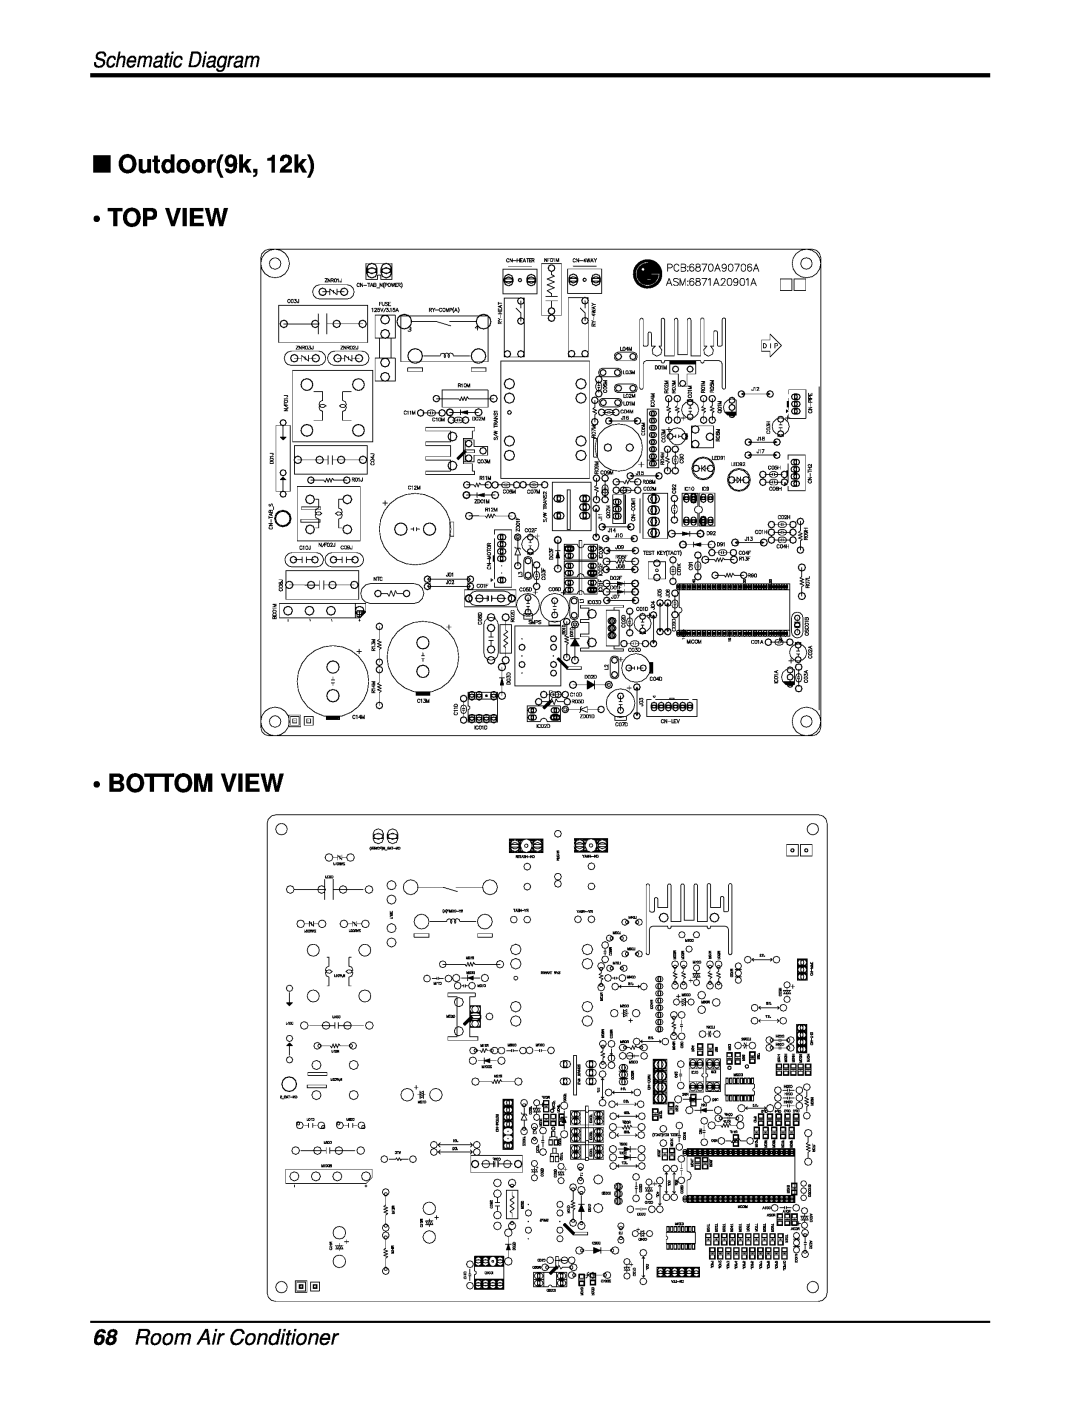 Heat Controller DMH24SB-1, DMC18SB-1 Outdoor9k, 12k TOP VIEW BOTTOM VIEW, 68Room Air Conditioner, Schematic Diagram 